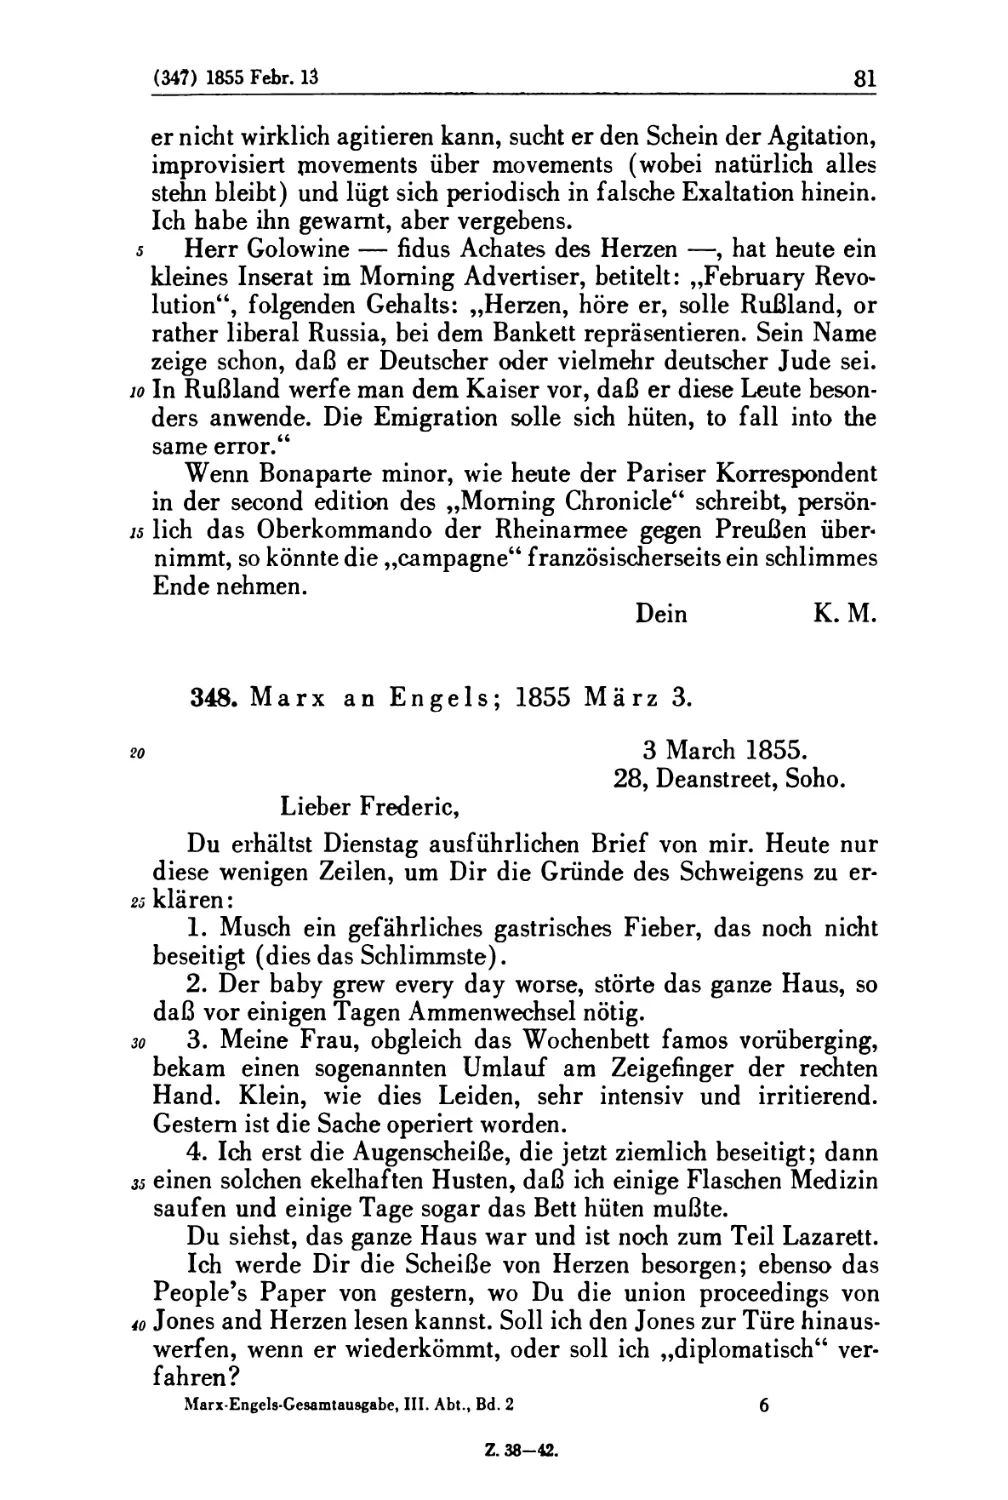 348. Marx an Engels; 1855 März 3